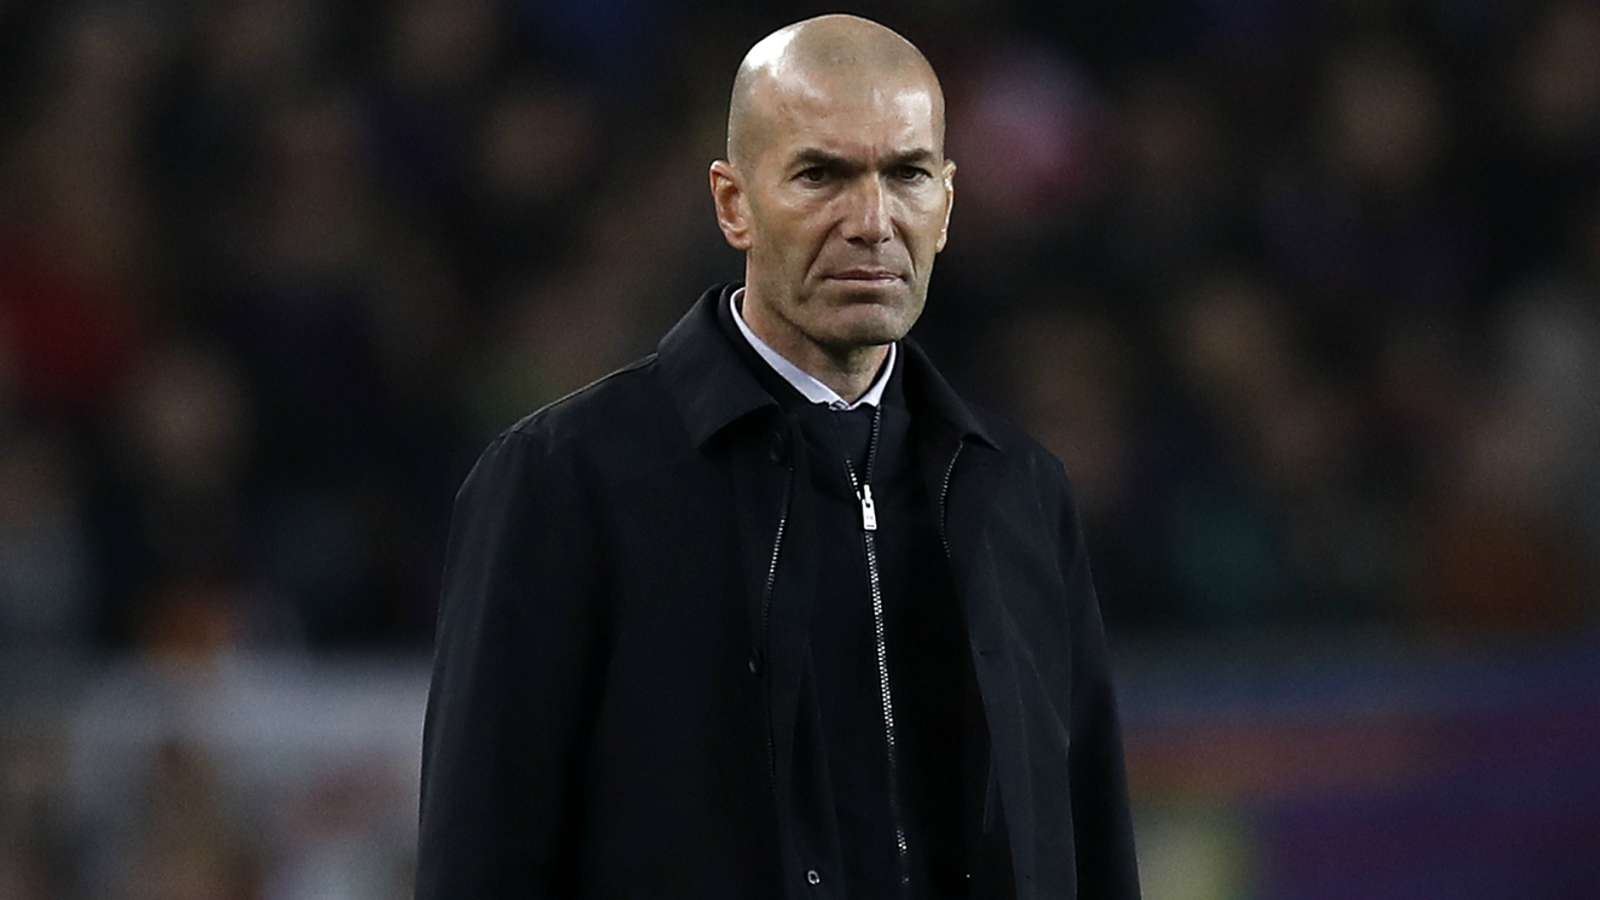 Clasico draw against Barcelona 'not good enough' for Real Madrid boss Zidane - Bóng Đá